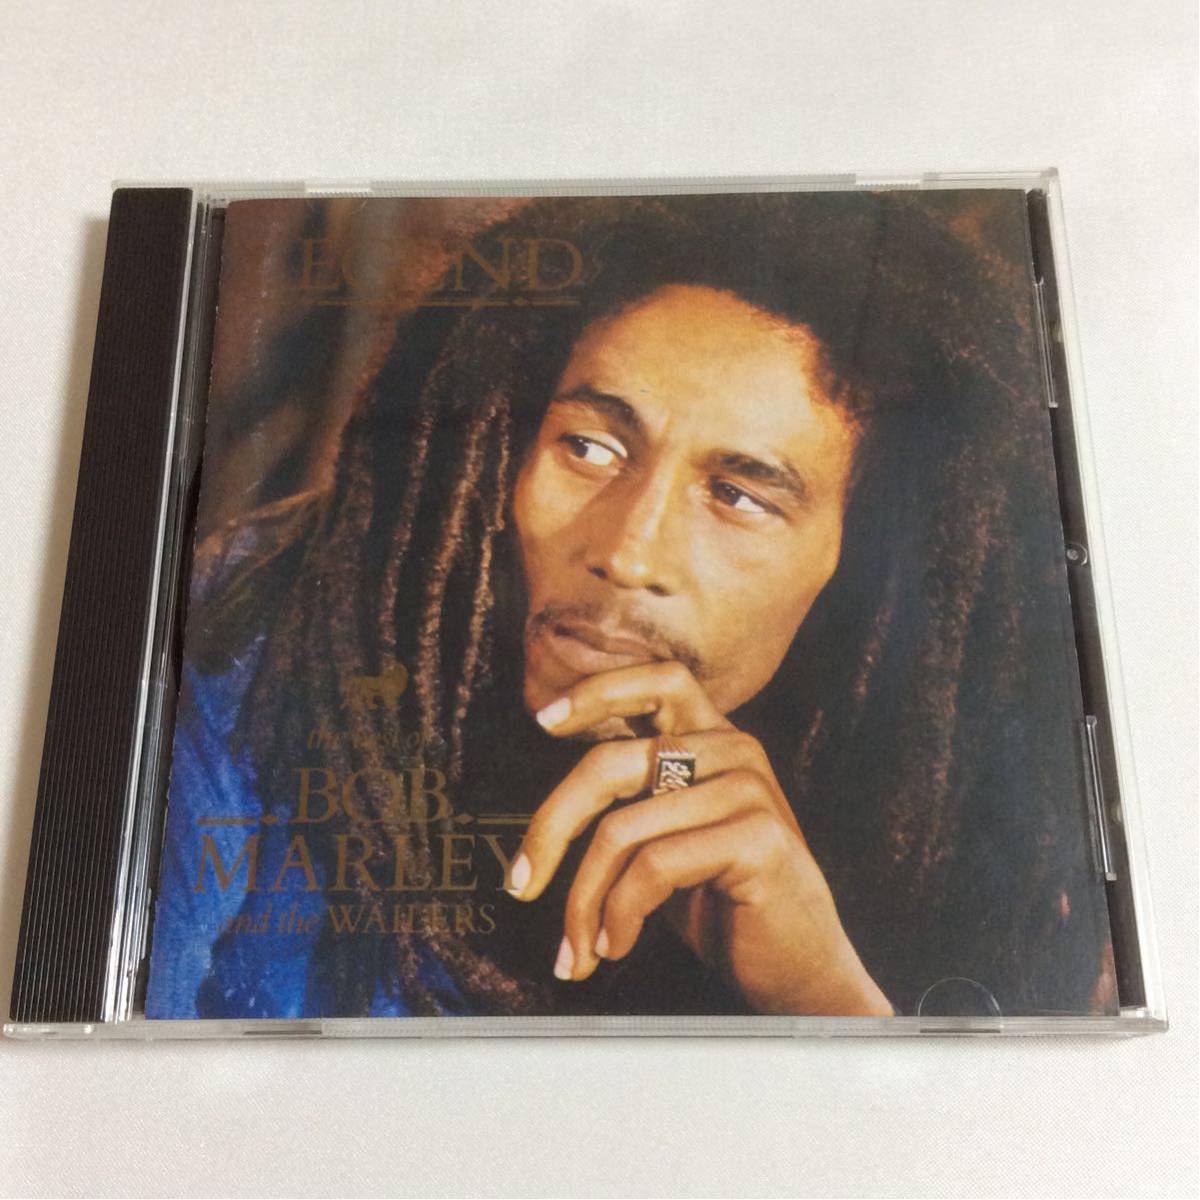 Bob Marley 11LP BOX レコード BOX SET ボブマーリー horizonte.ce.gov.br